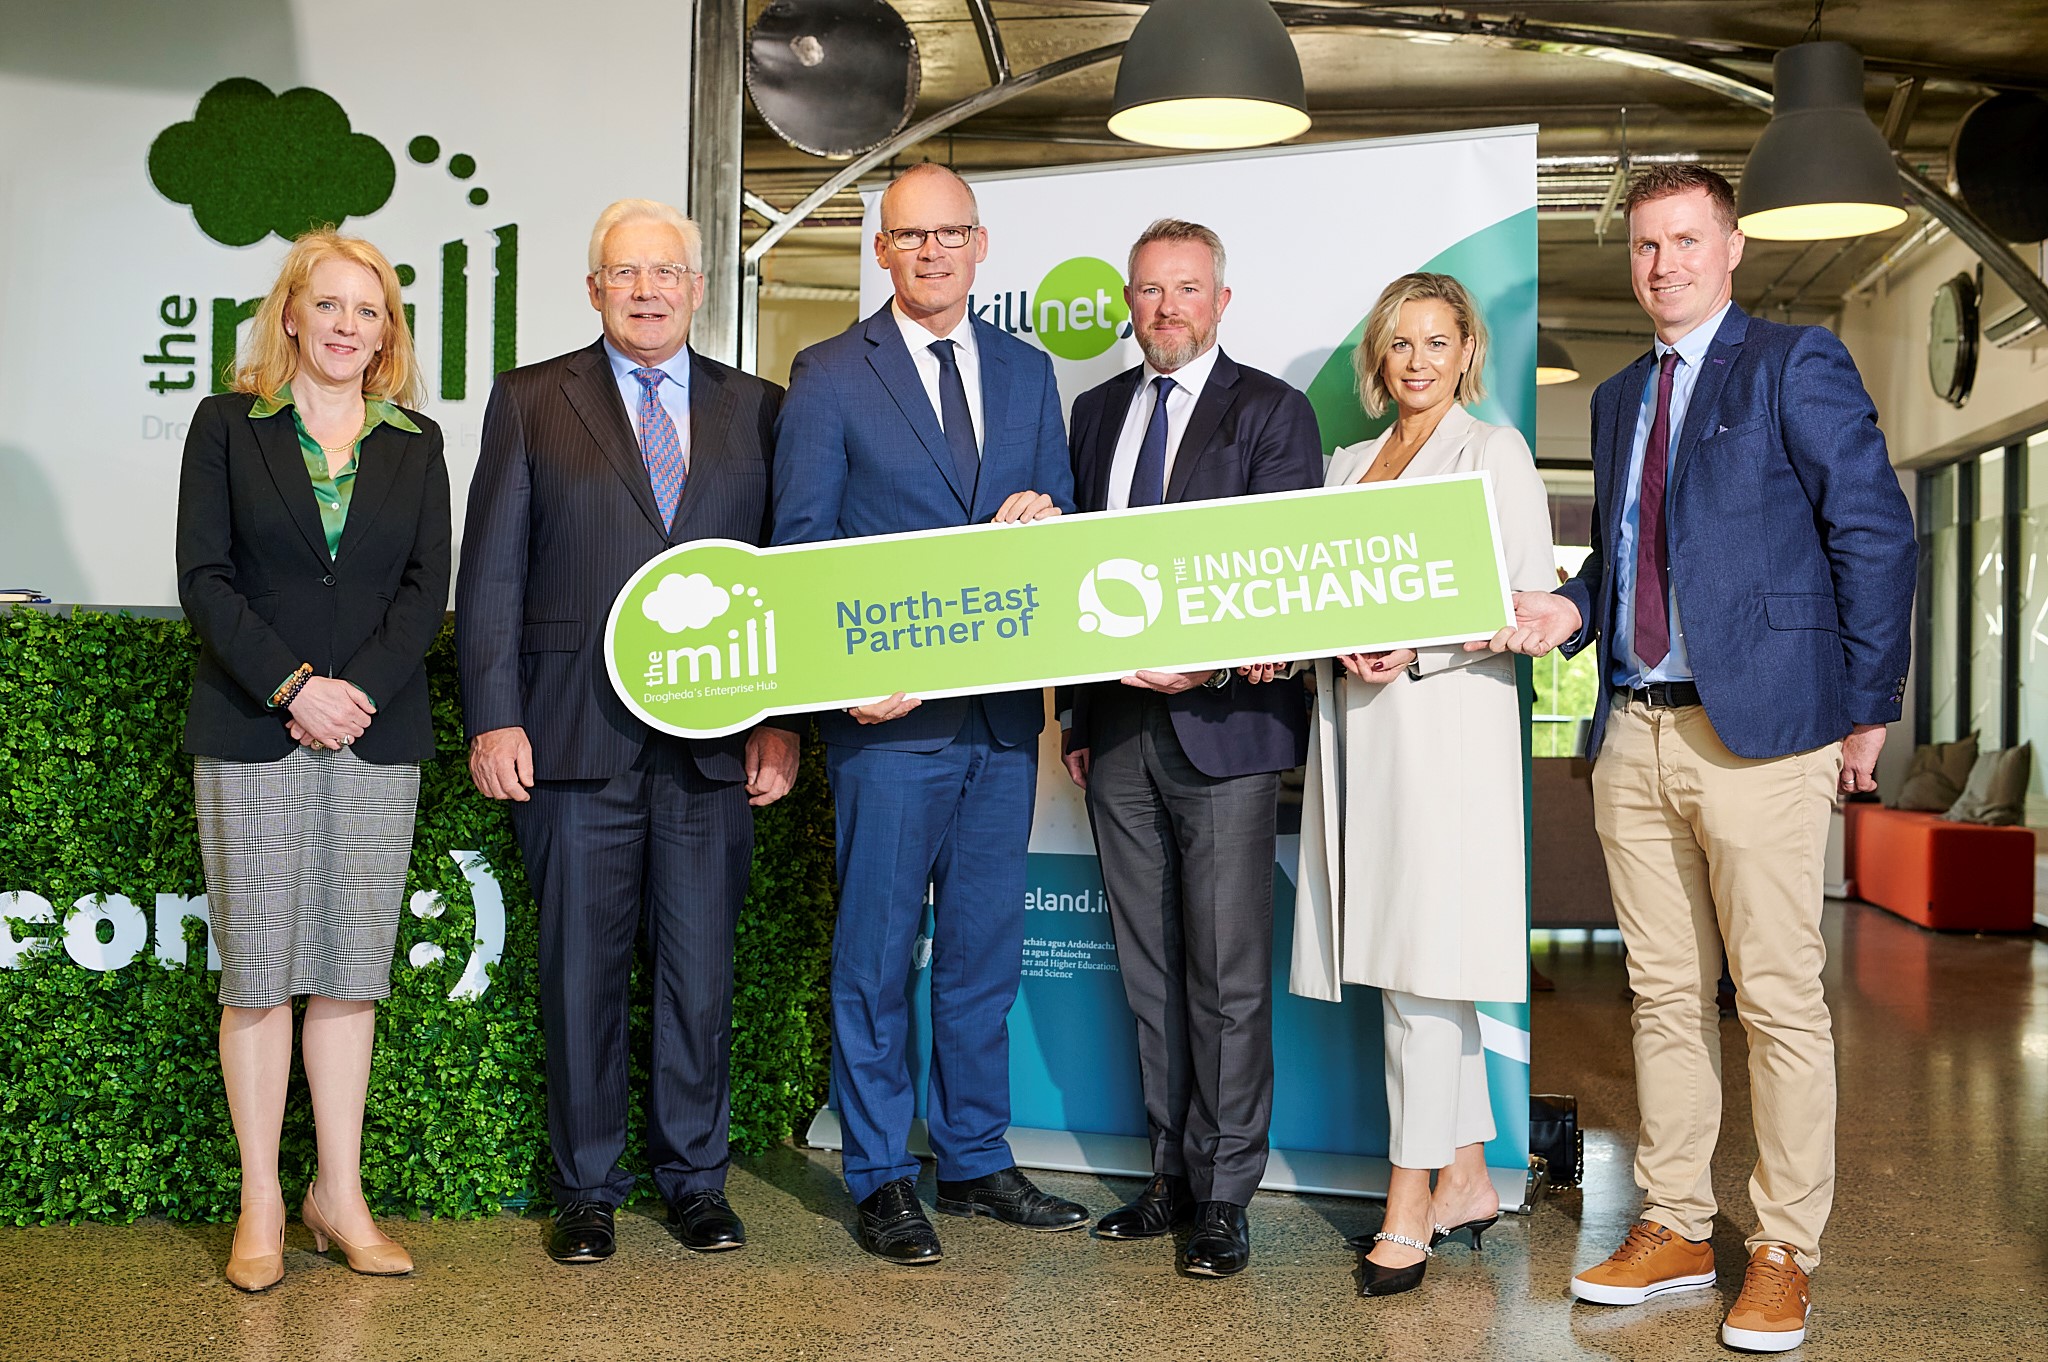 Skillnet Innovation Exchange announces latest partnership with The Mill Enterprise Hub, Drogheda